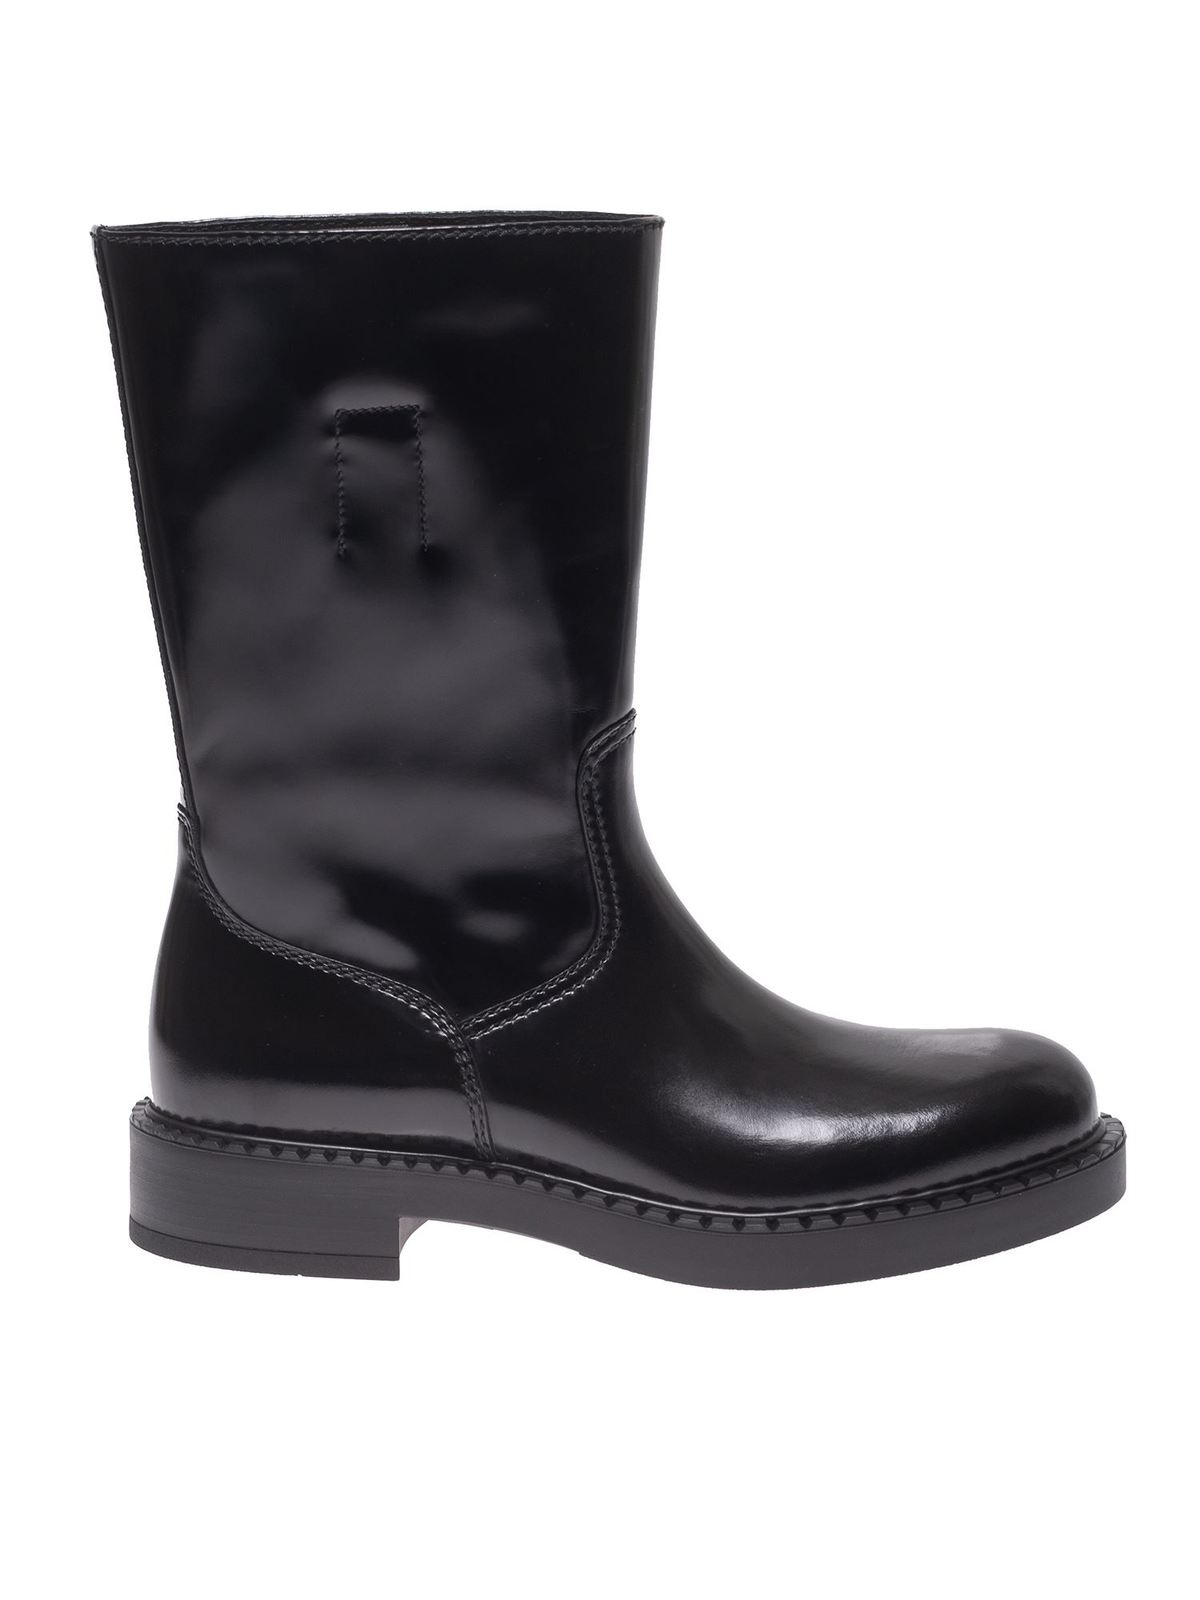 Boots Prada - Shiny leather boots in black - 2UE012P39F0002 | iKRIX.com